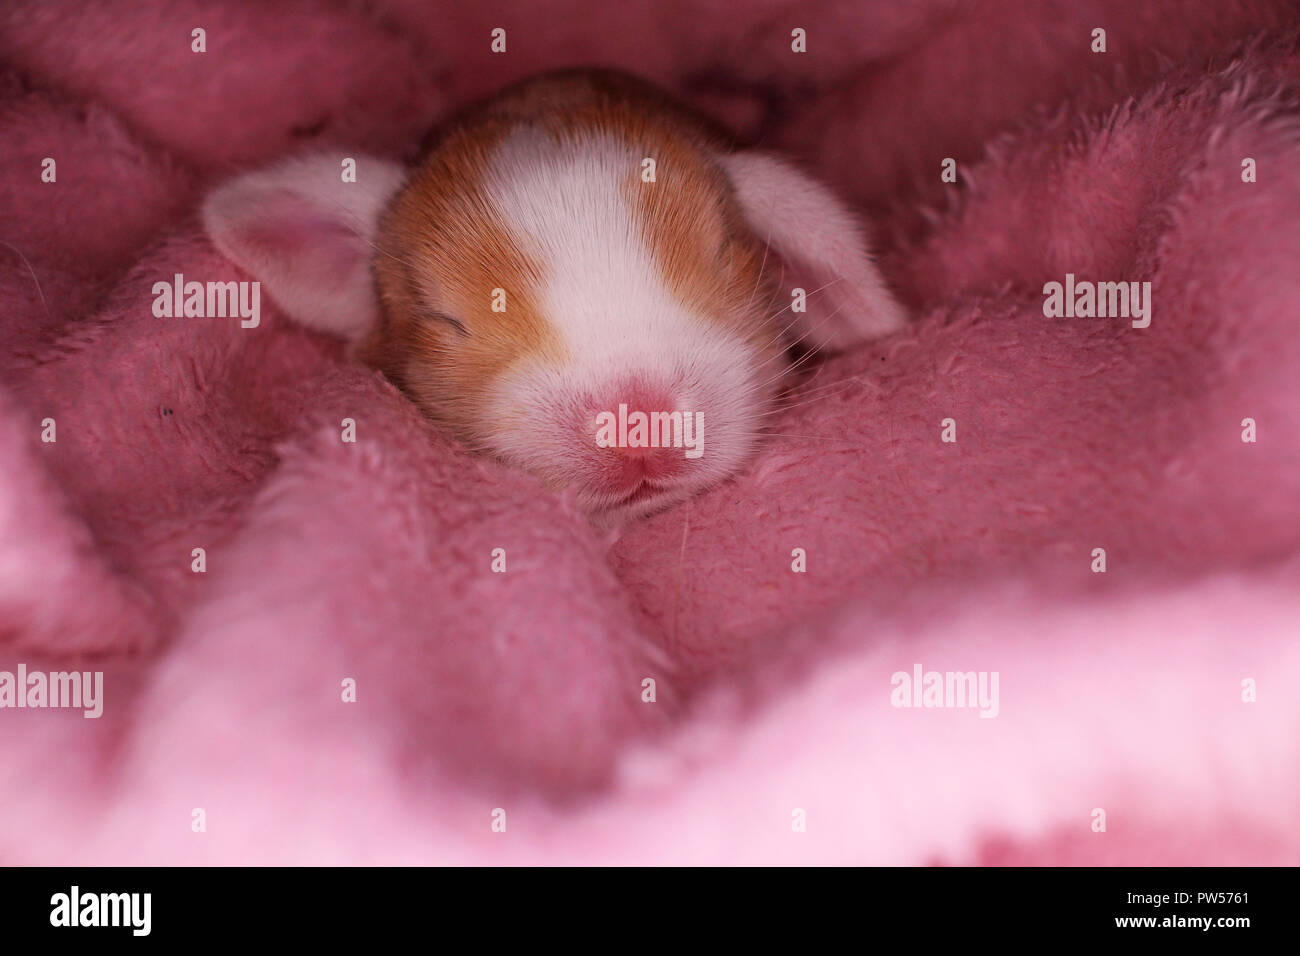 Cute Bunny Lop Rabbit Baby Kit On Colorful Studio Background New Born Baby Animal Pet Rabbits Stock Photo Alamy